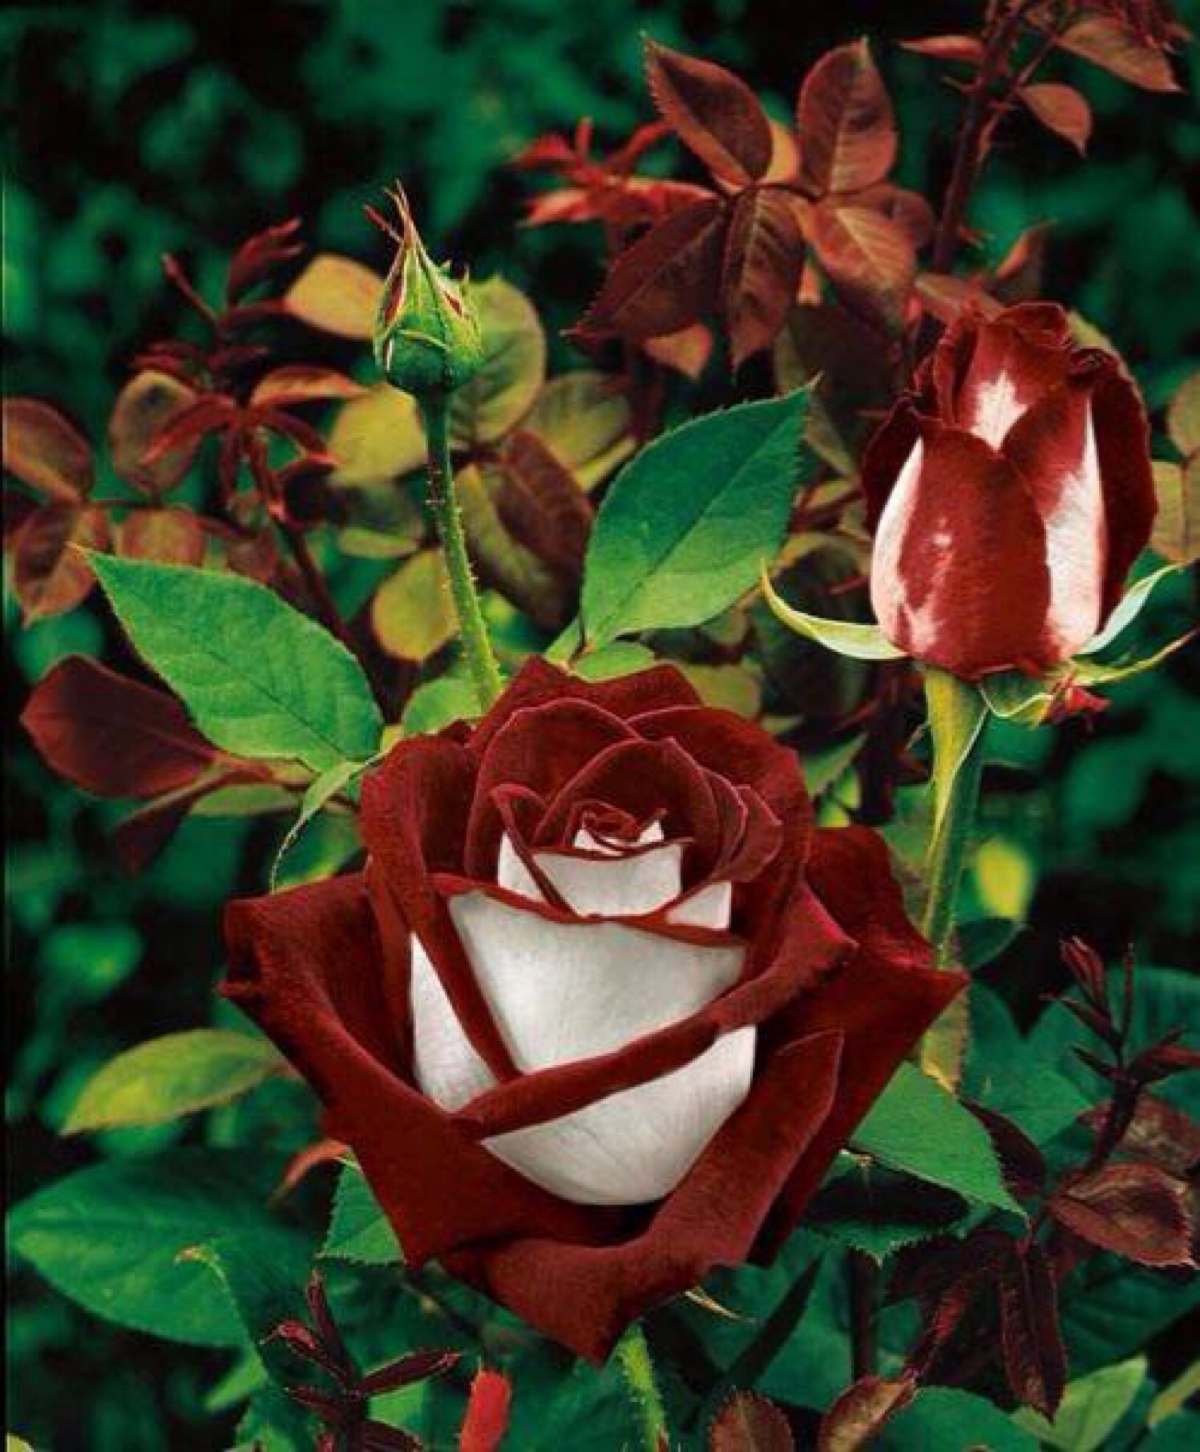 osiria rose,一种红白双色的特殊玫瑰 图源于微博 by细水长流